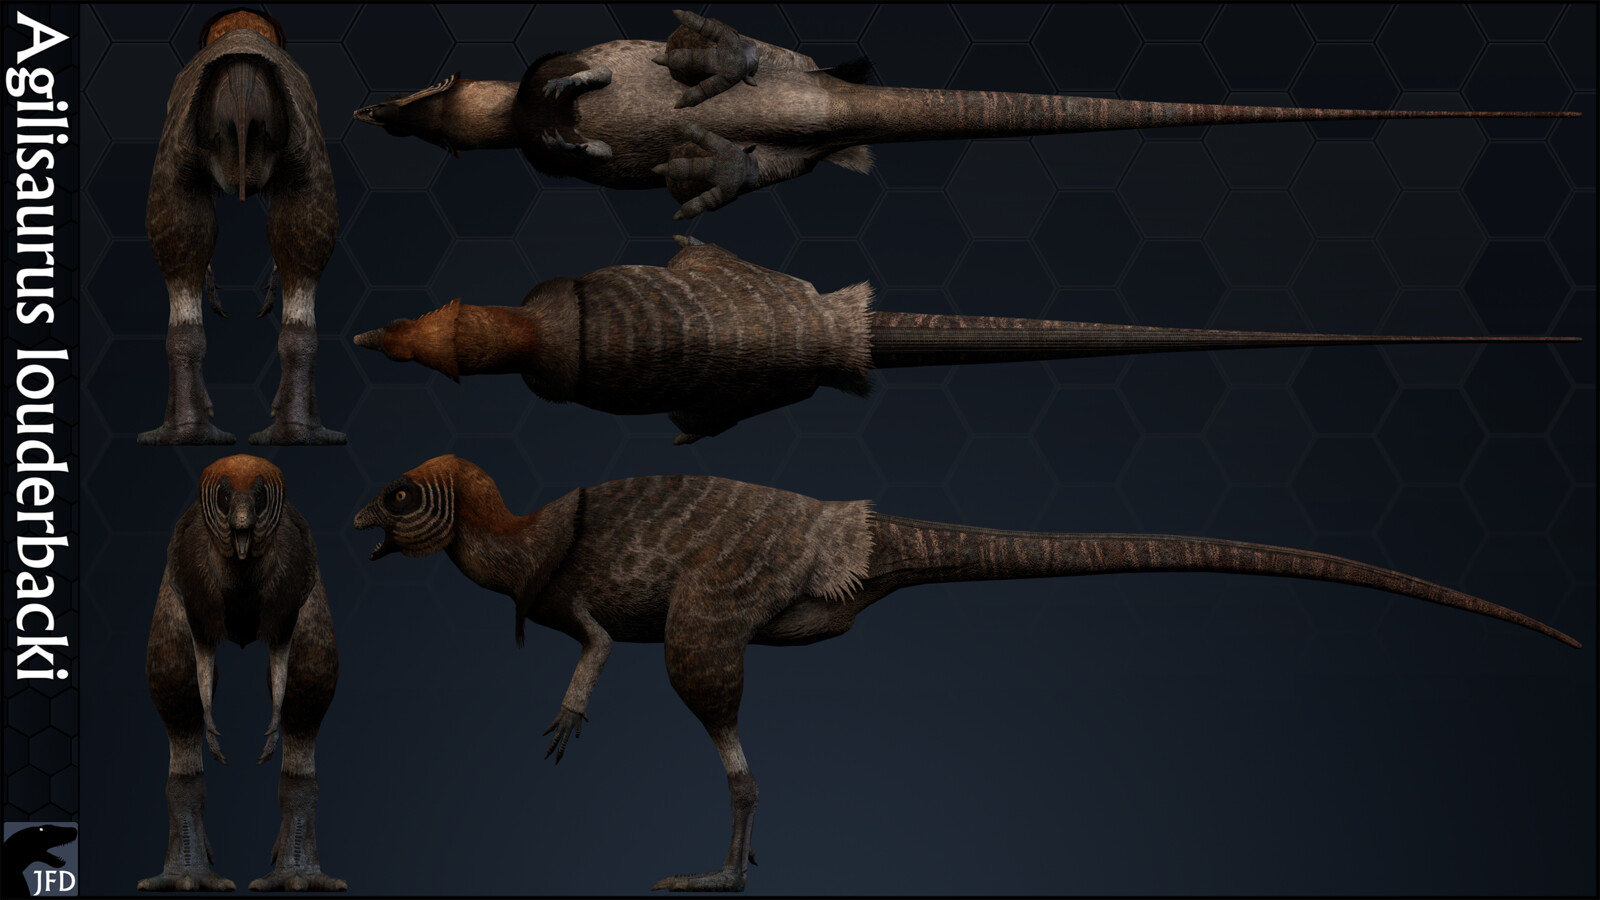 Agilisaurus louderbacki orthographic multi-view render.